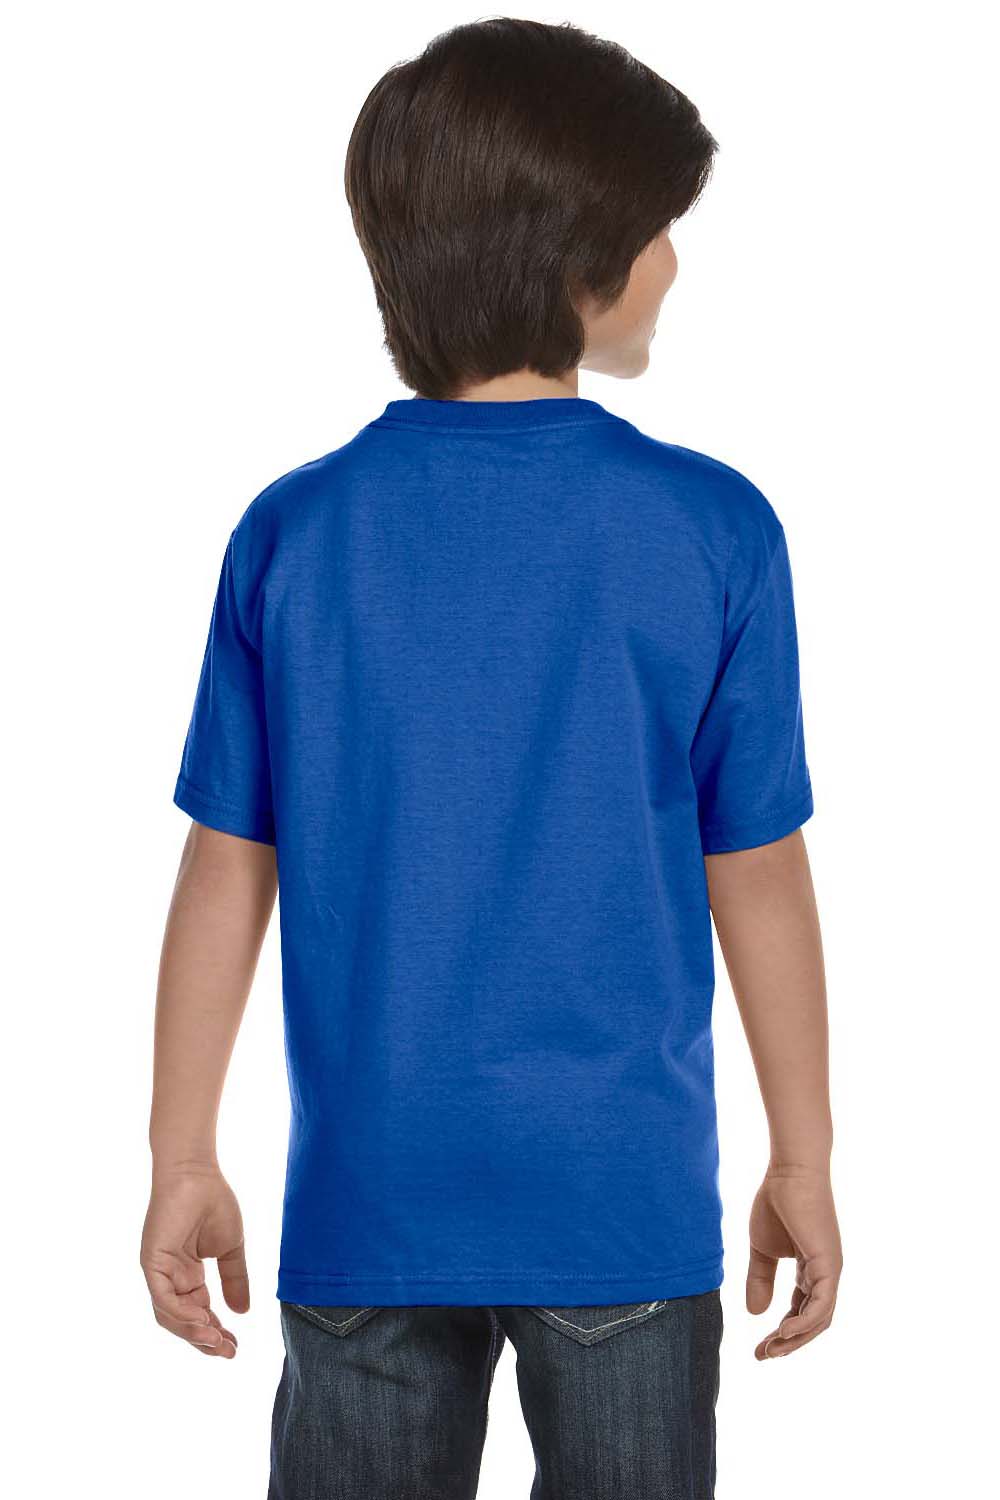 Gildan G800B Youth DryBlend Moisture Wicking Short Sleeve Crewneck T-Shirt Royal Blue Back